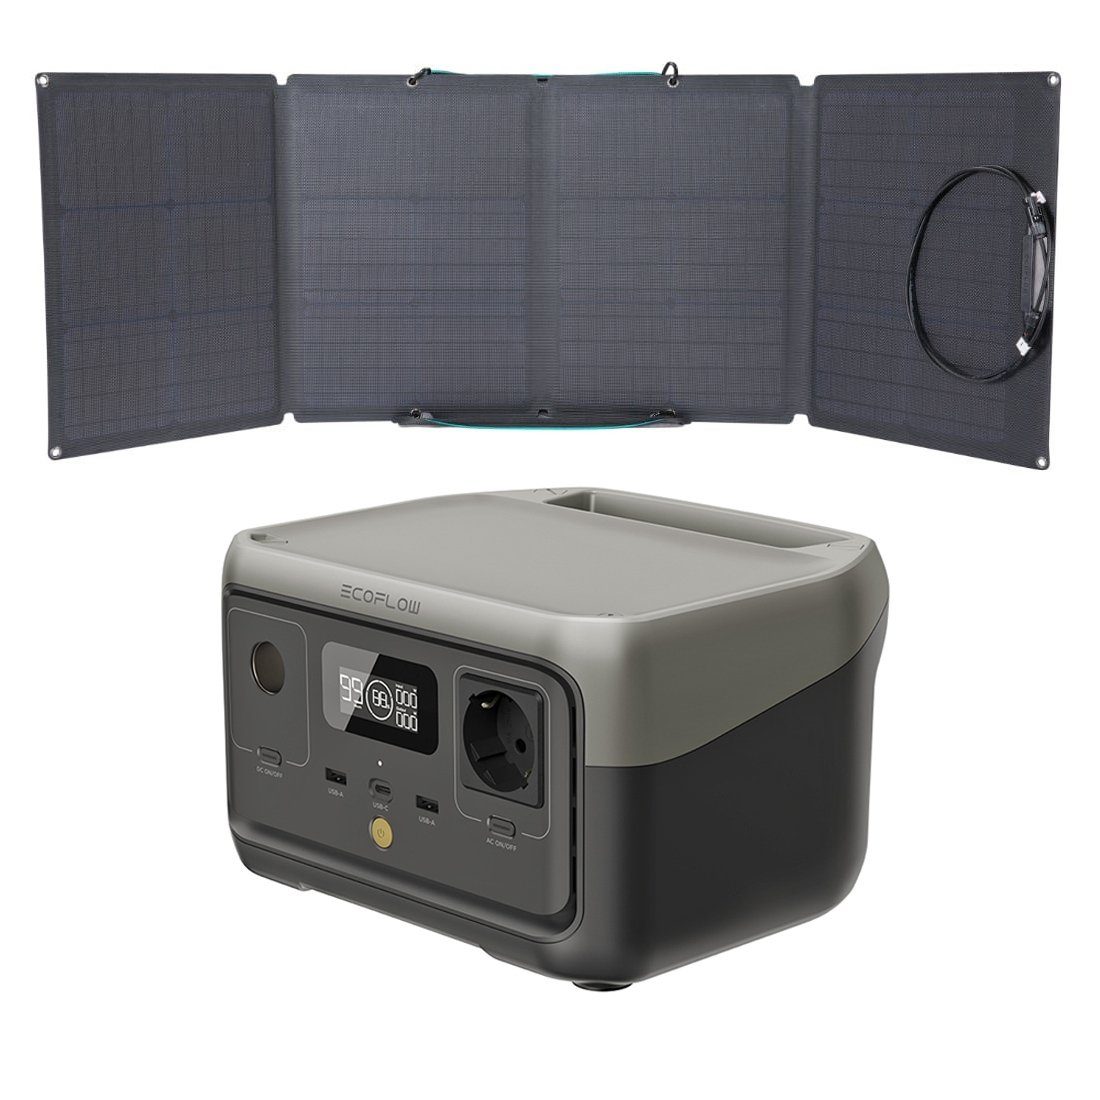 Solarpanel 110W River Ecoflow 2 Smart-Home-Station Powerstation Ecoflow mit